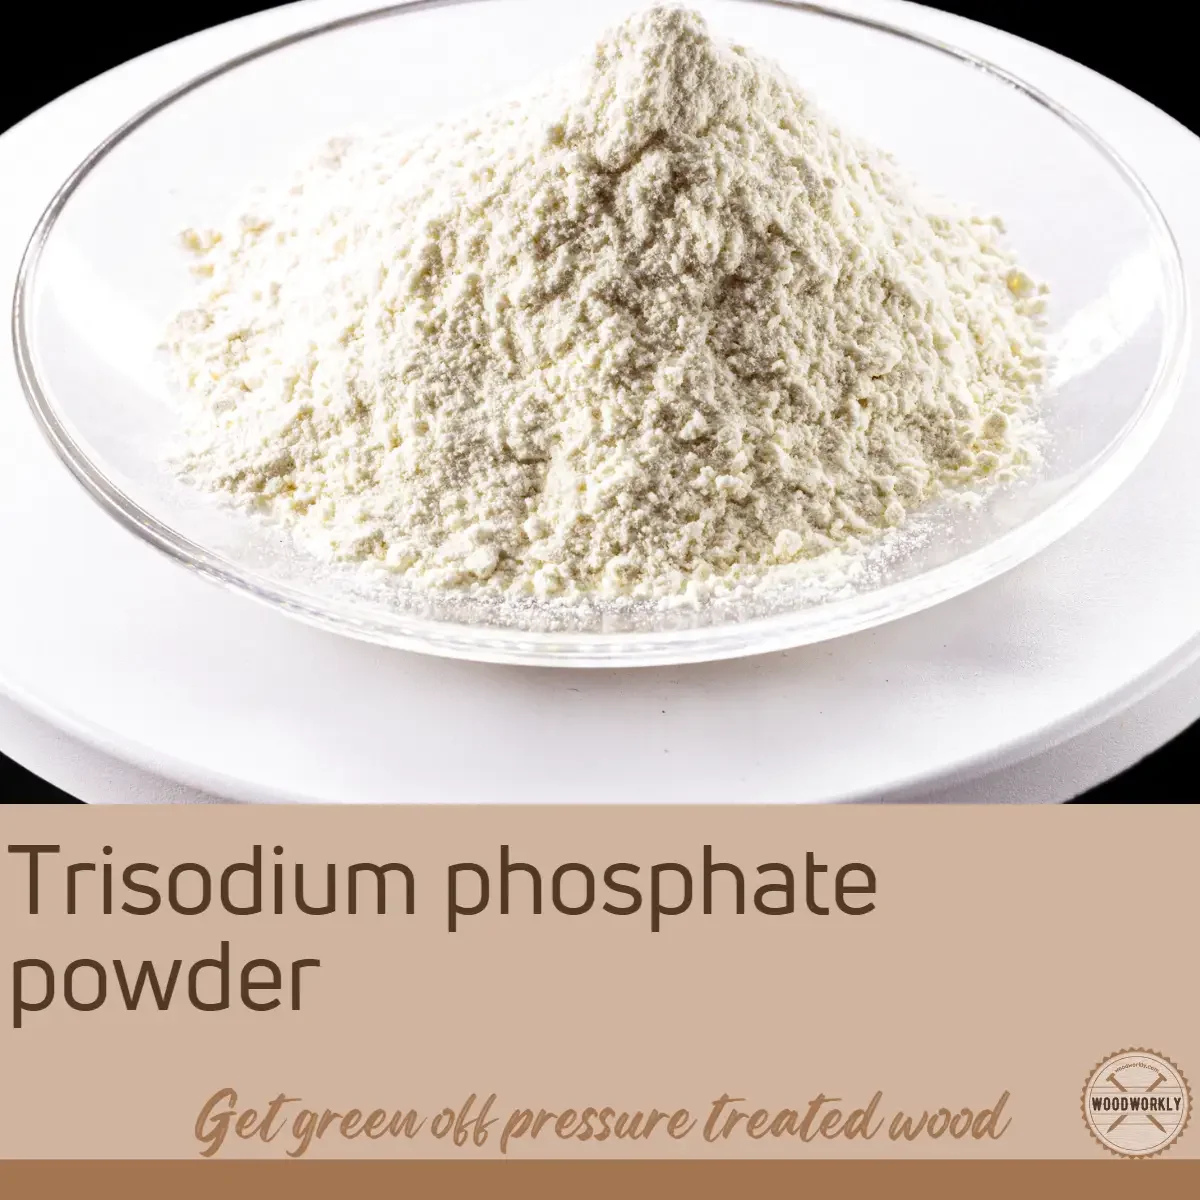 Trisodium phosphate powder